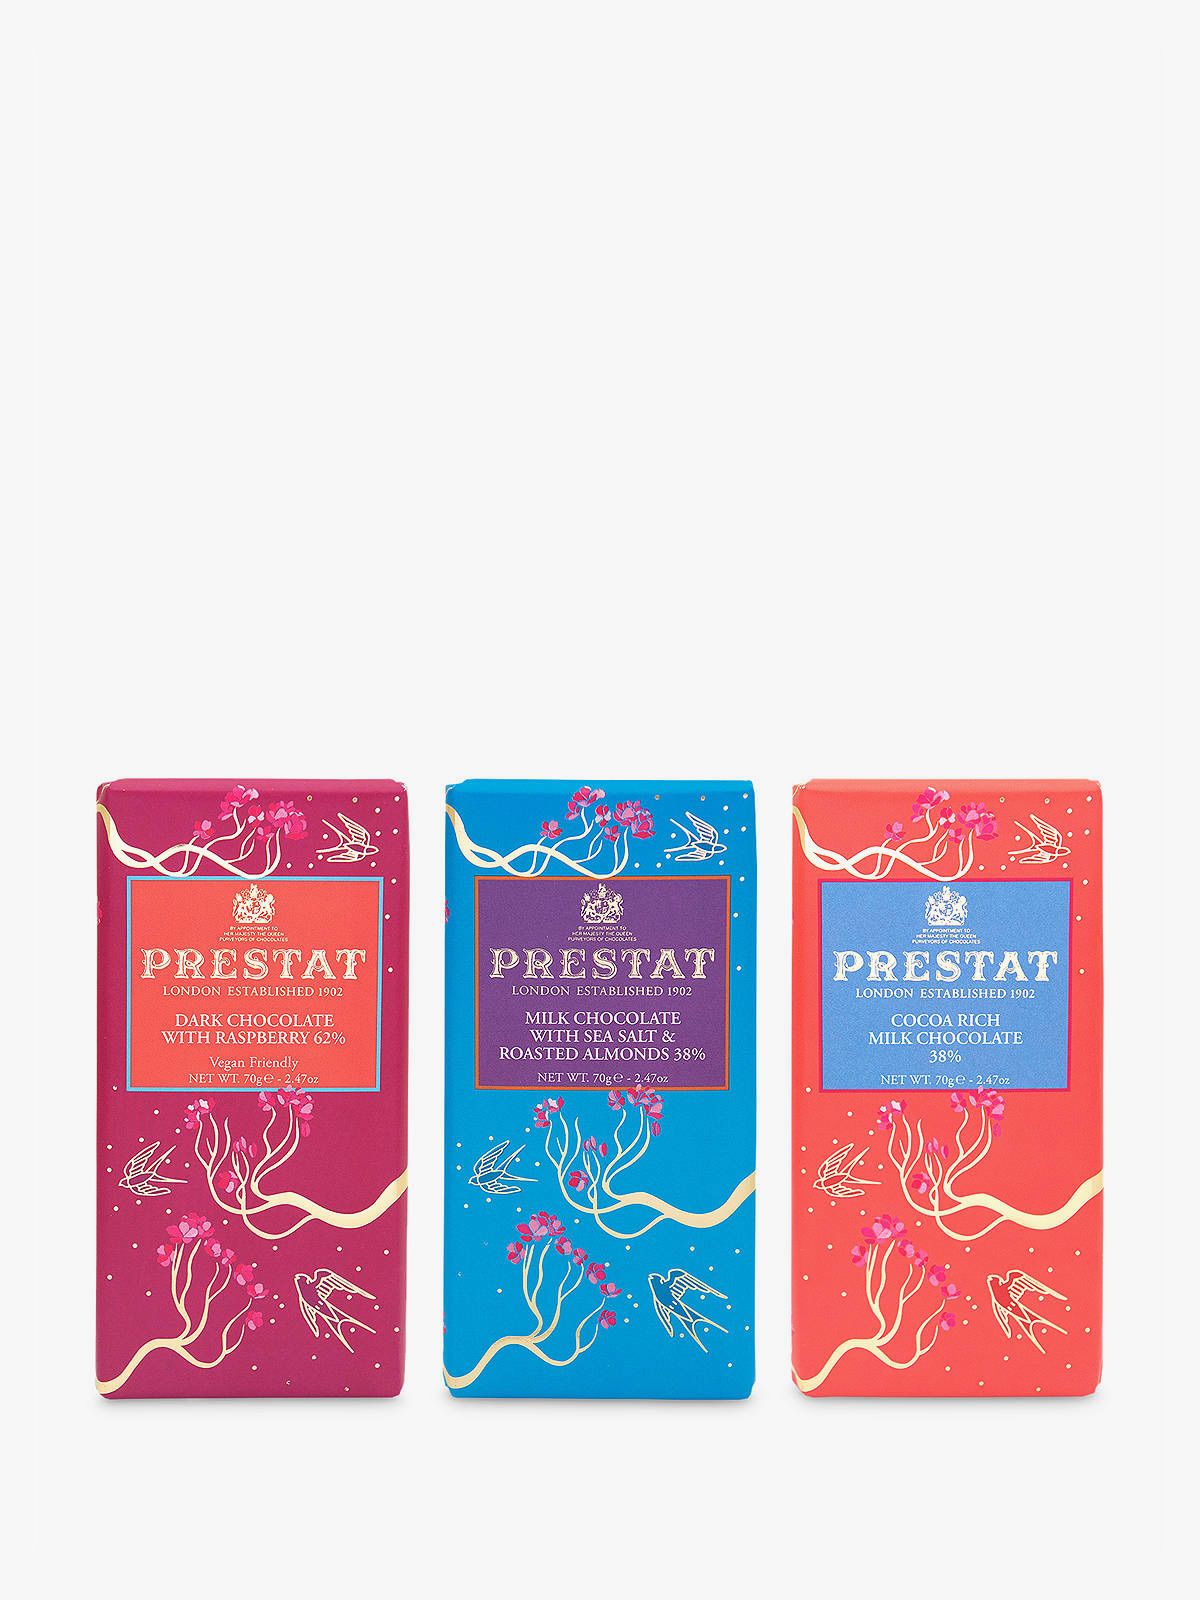 Prestat 3 Bar Chocolate Library, 3x 75g